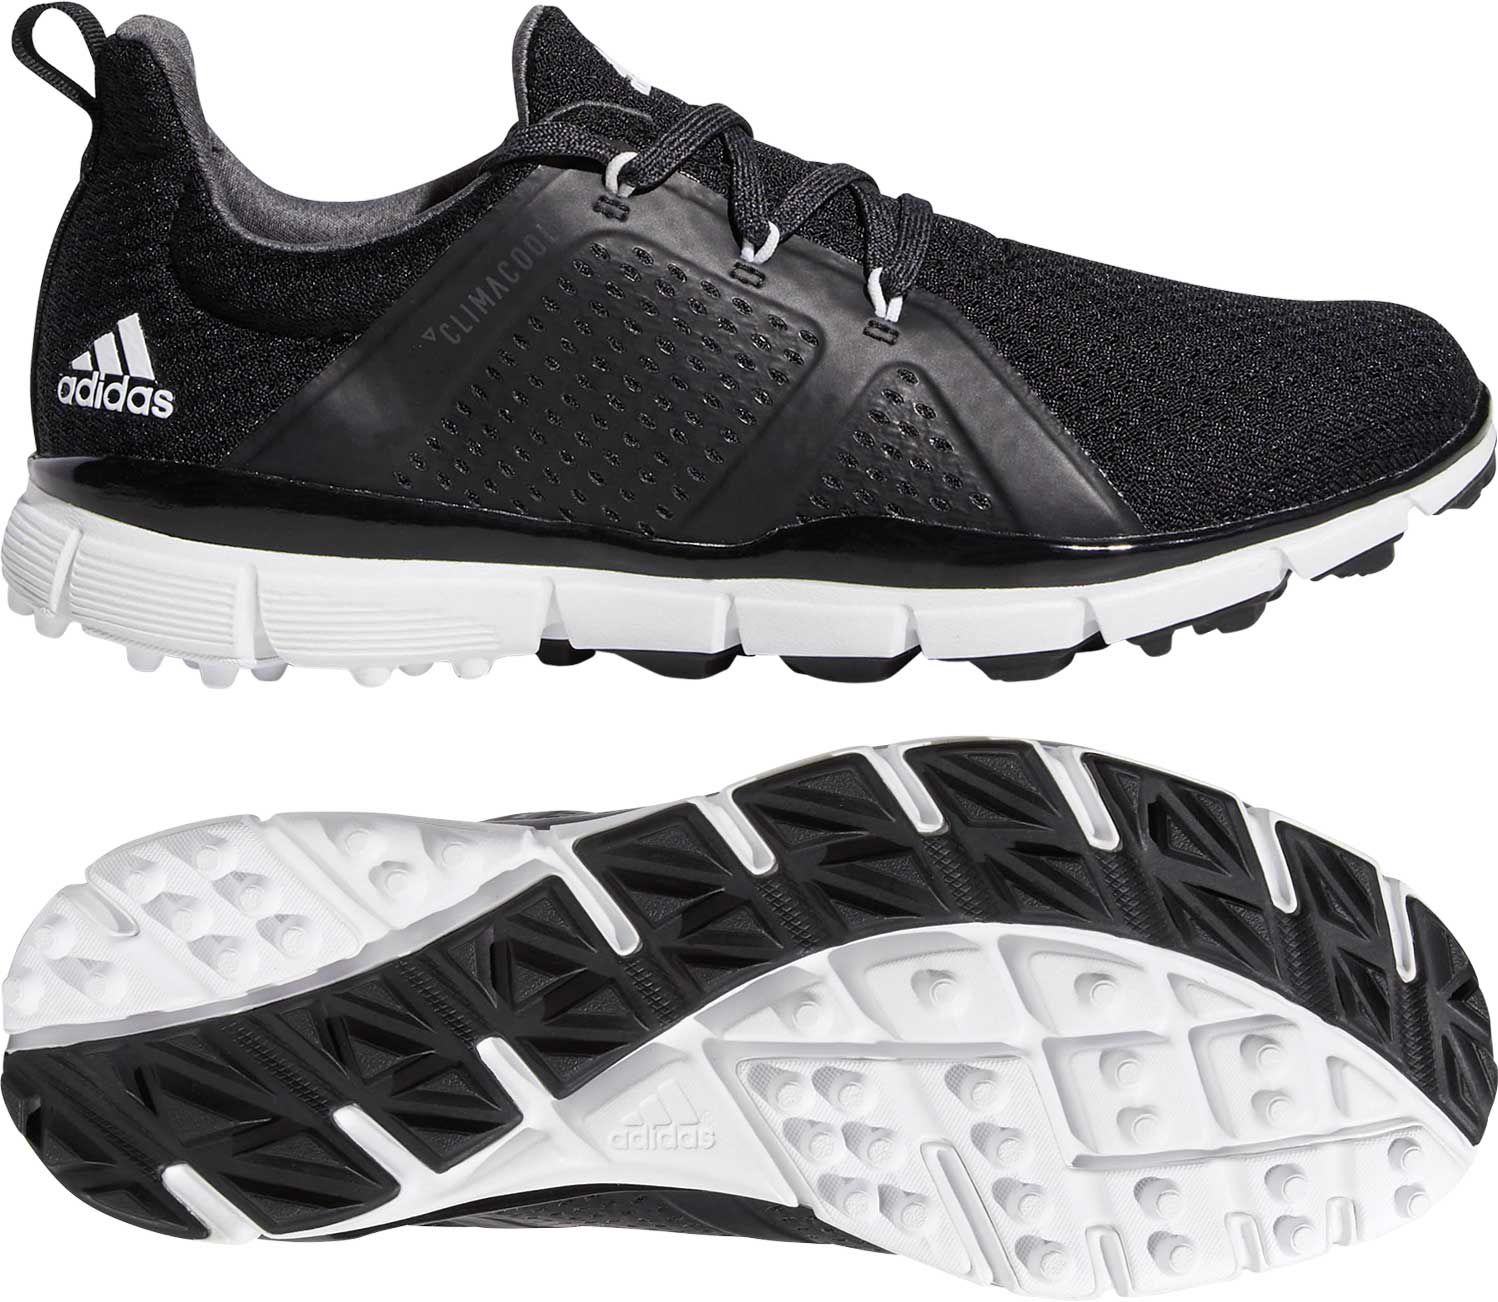 adidas golf shoes womens black